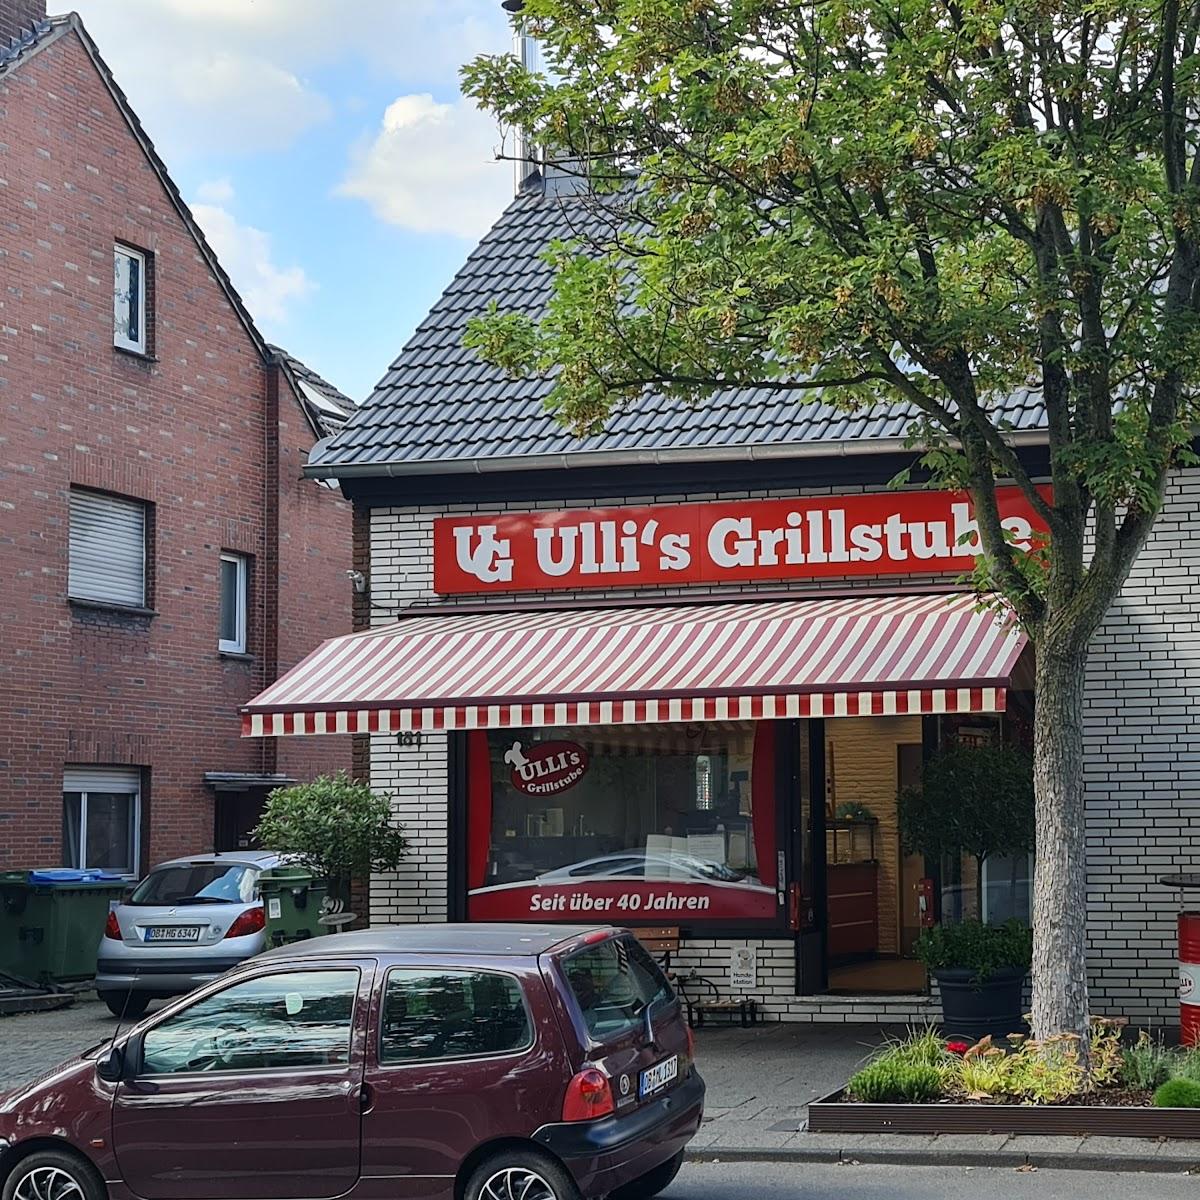 Restaurant "Ulli´s Grillstube" in Oberhausen